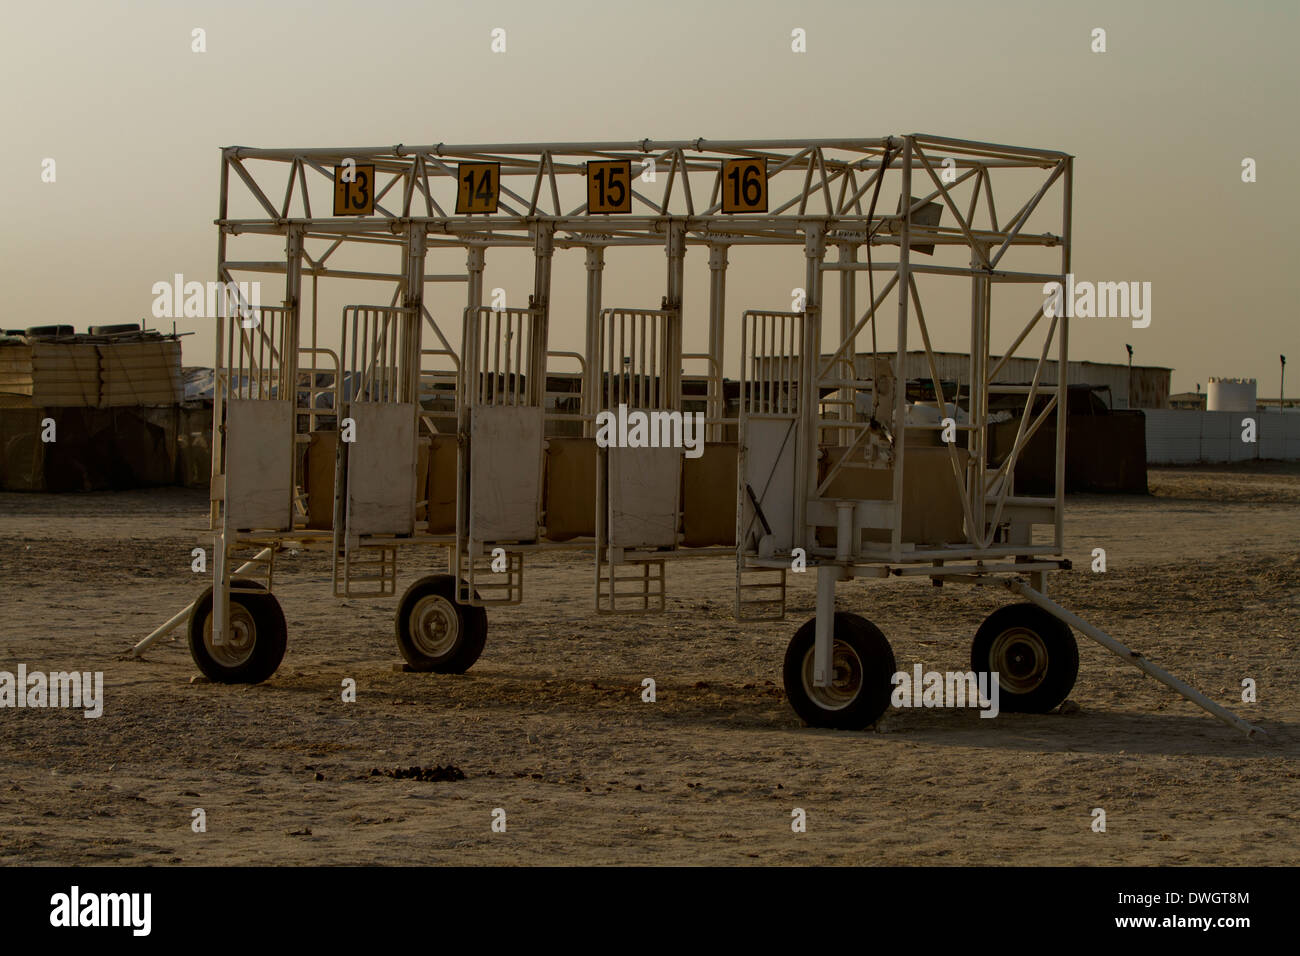 Qatar horse racing Starting gate box in Desert sun Stock Photo